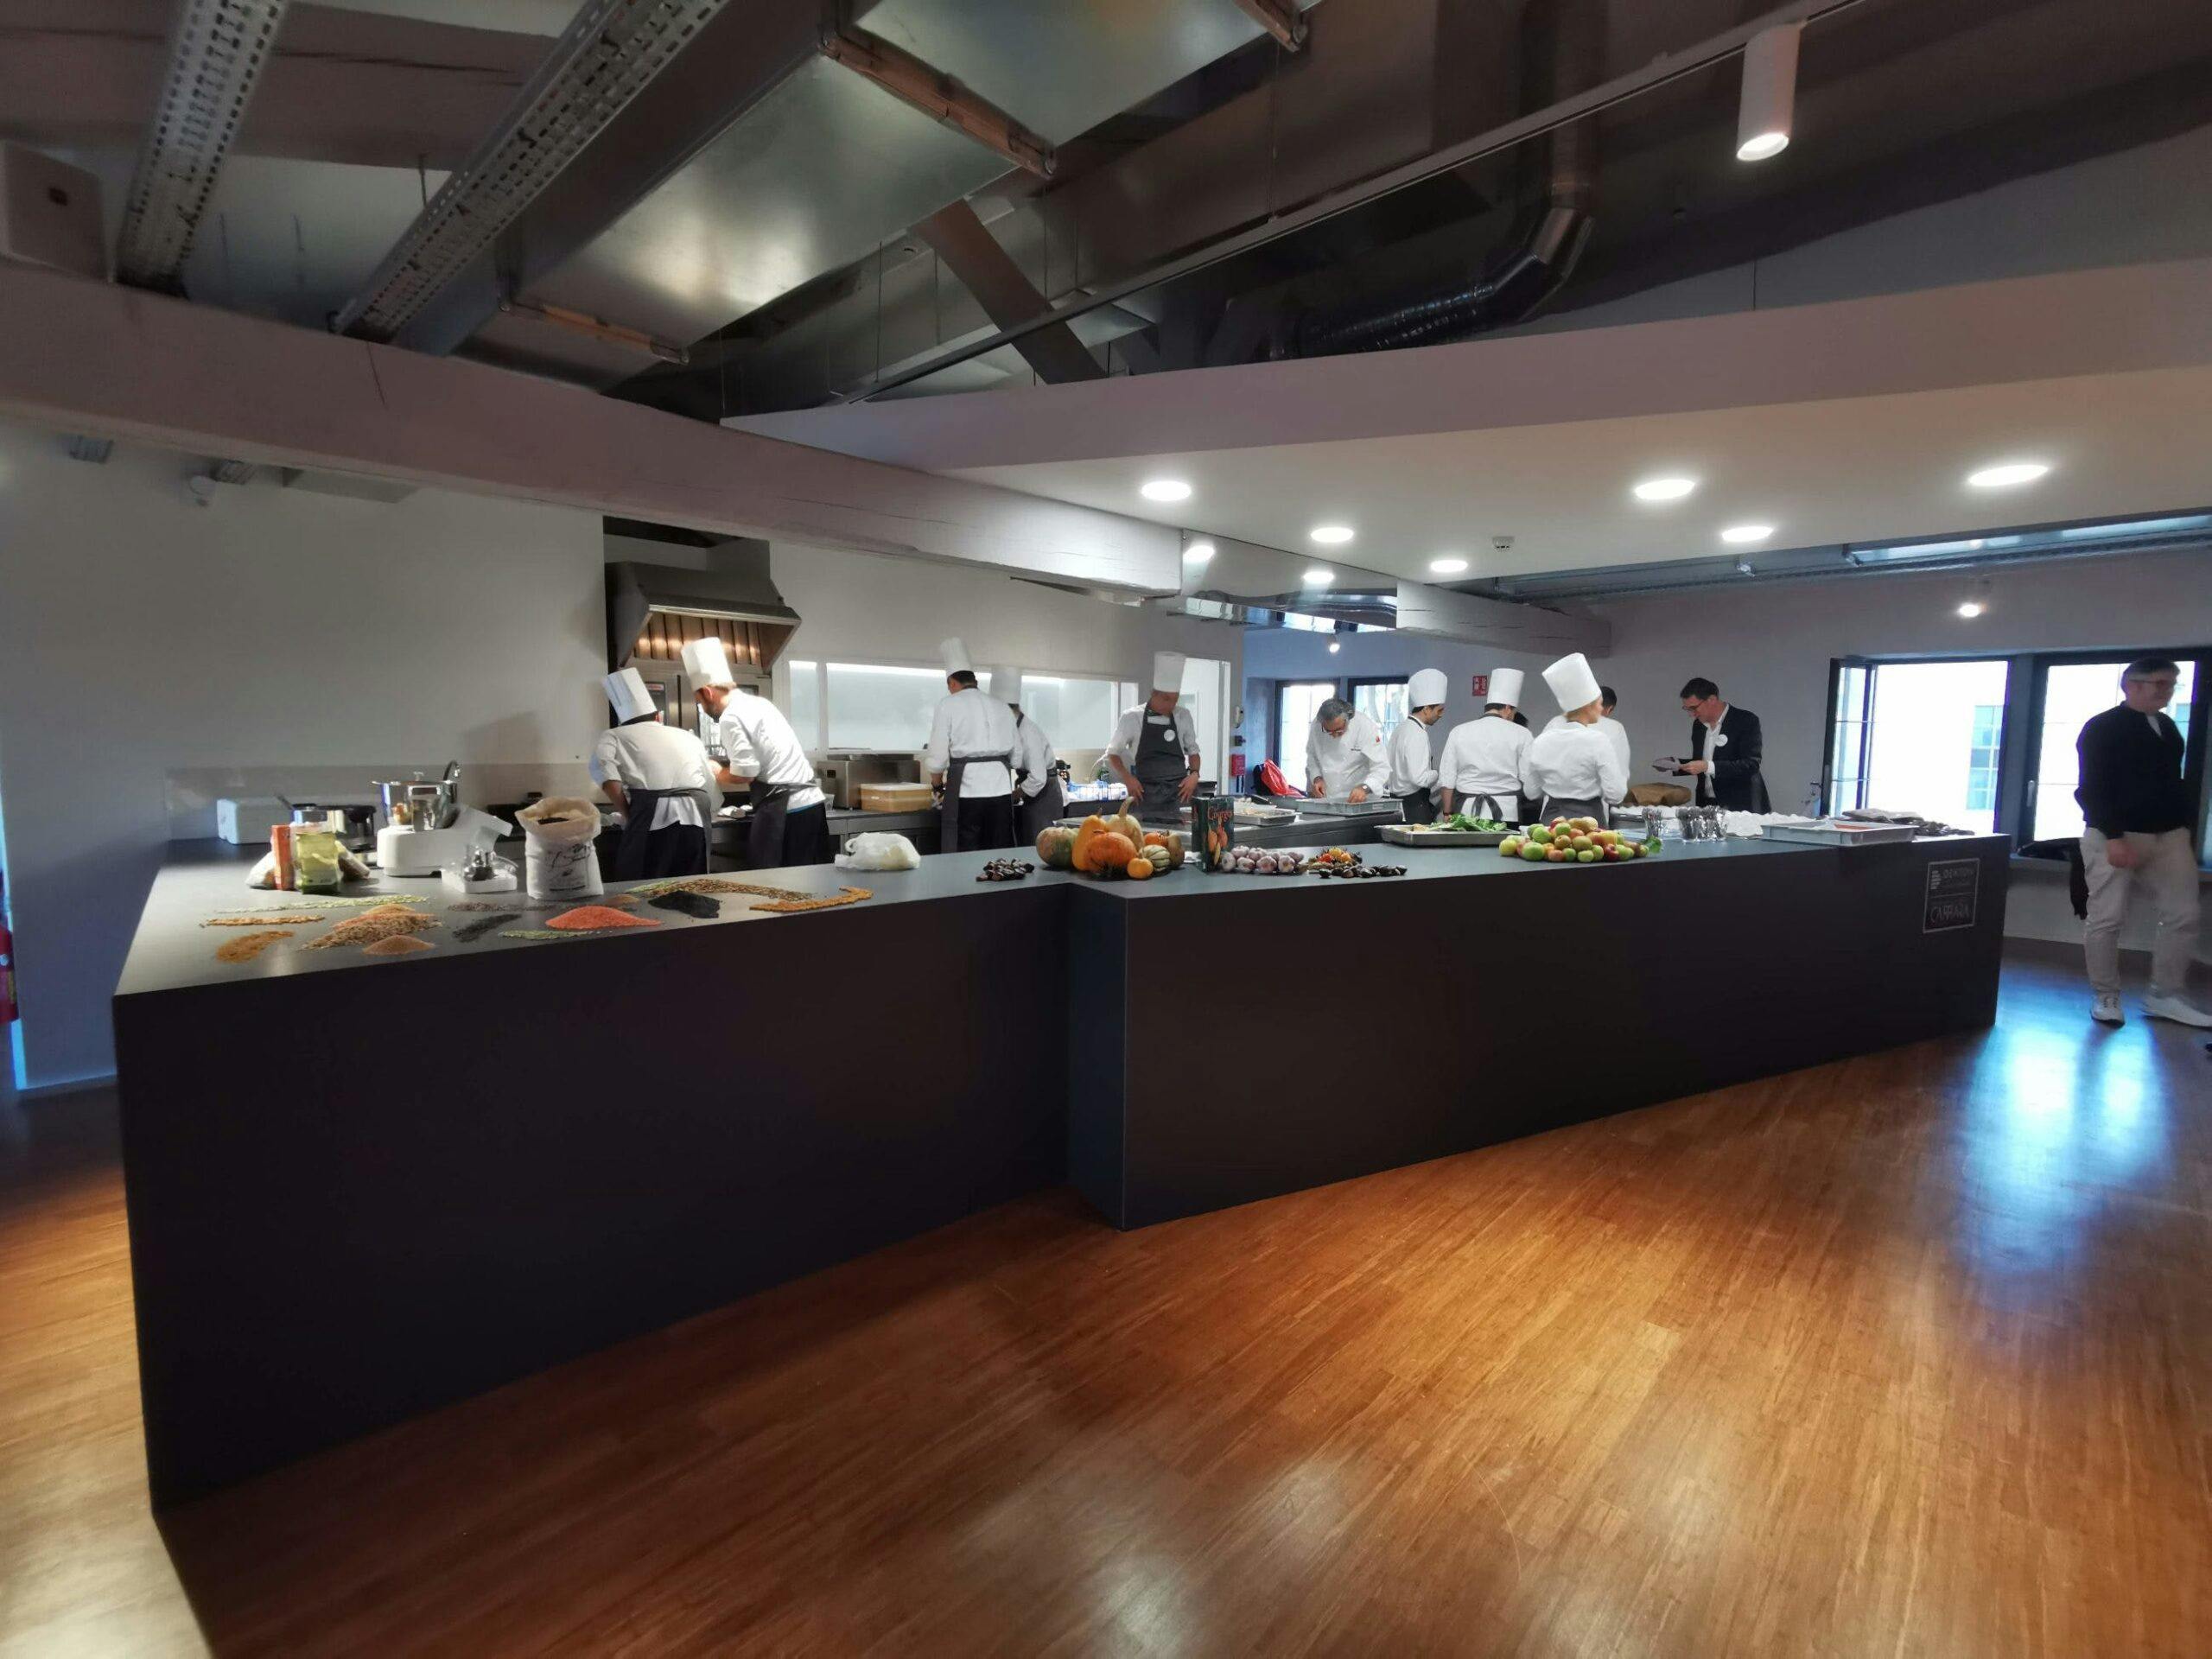 Image 34 of IMG 20191011 173615 copie 1 scaled in Dekton by Cosentino features the kitchen of the Cité Internationale de la Gastronomie - Cosentino